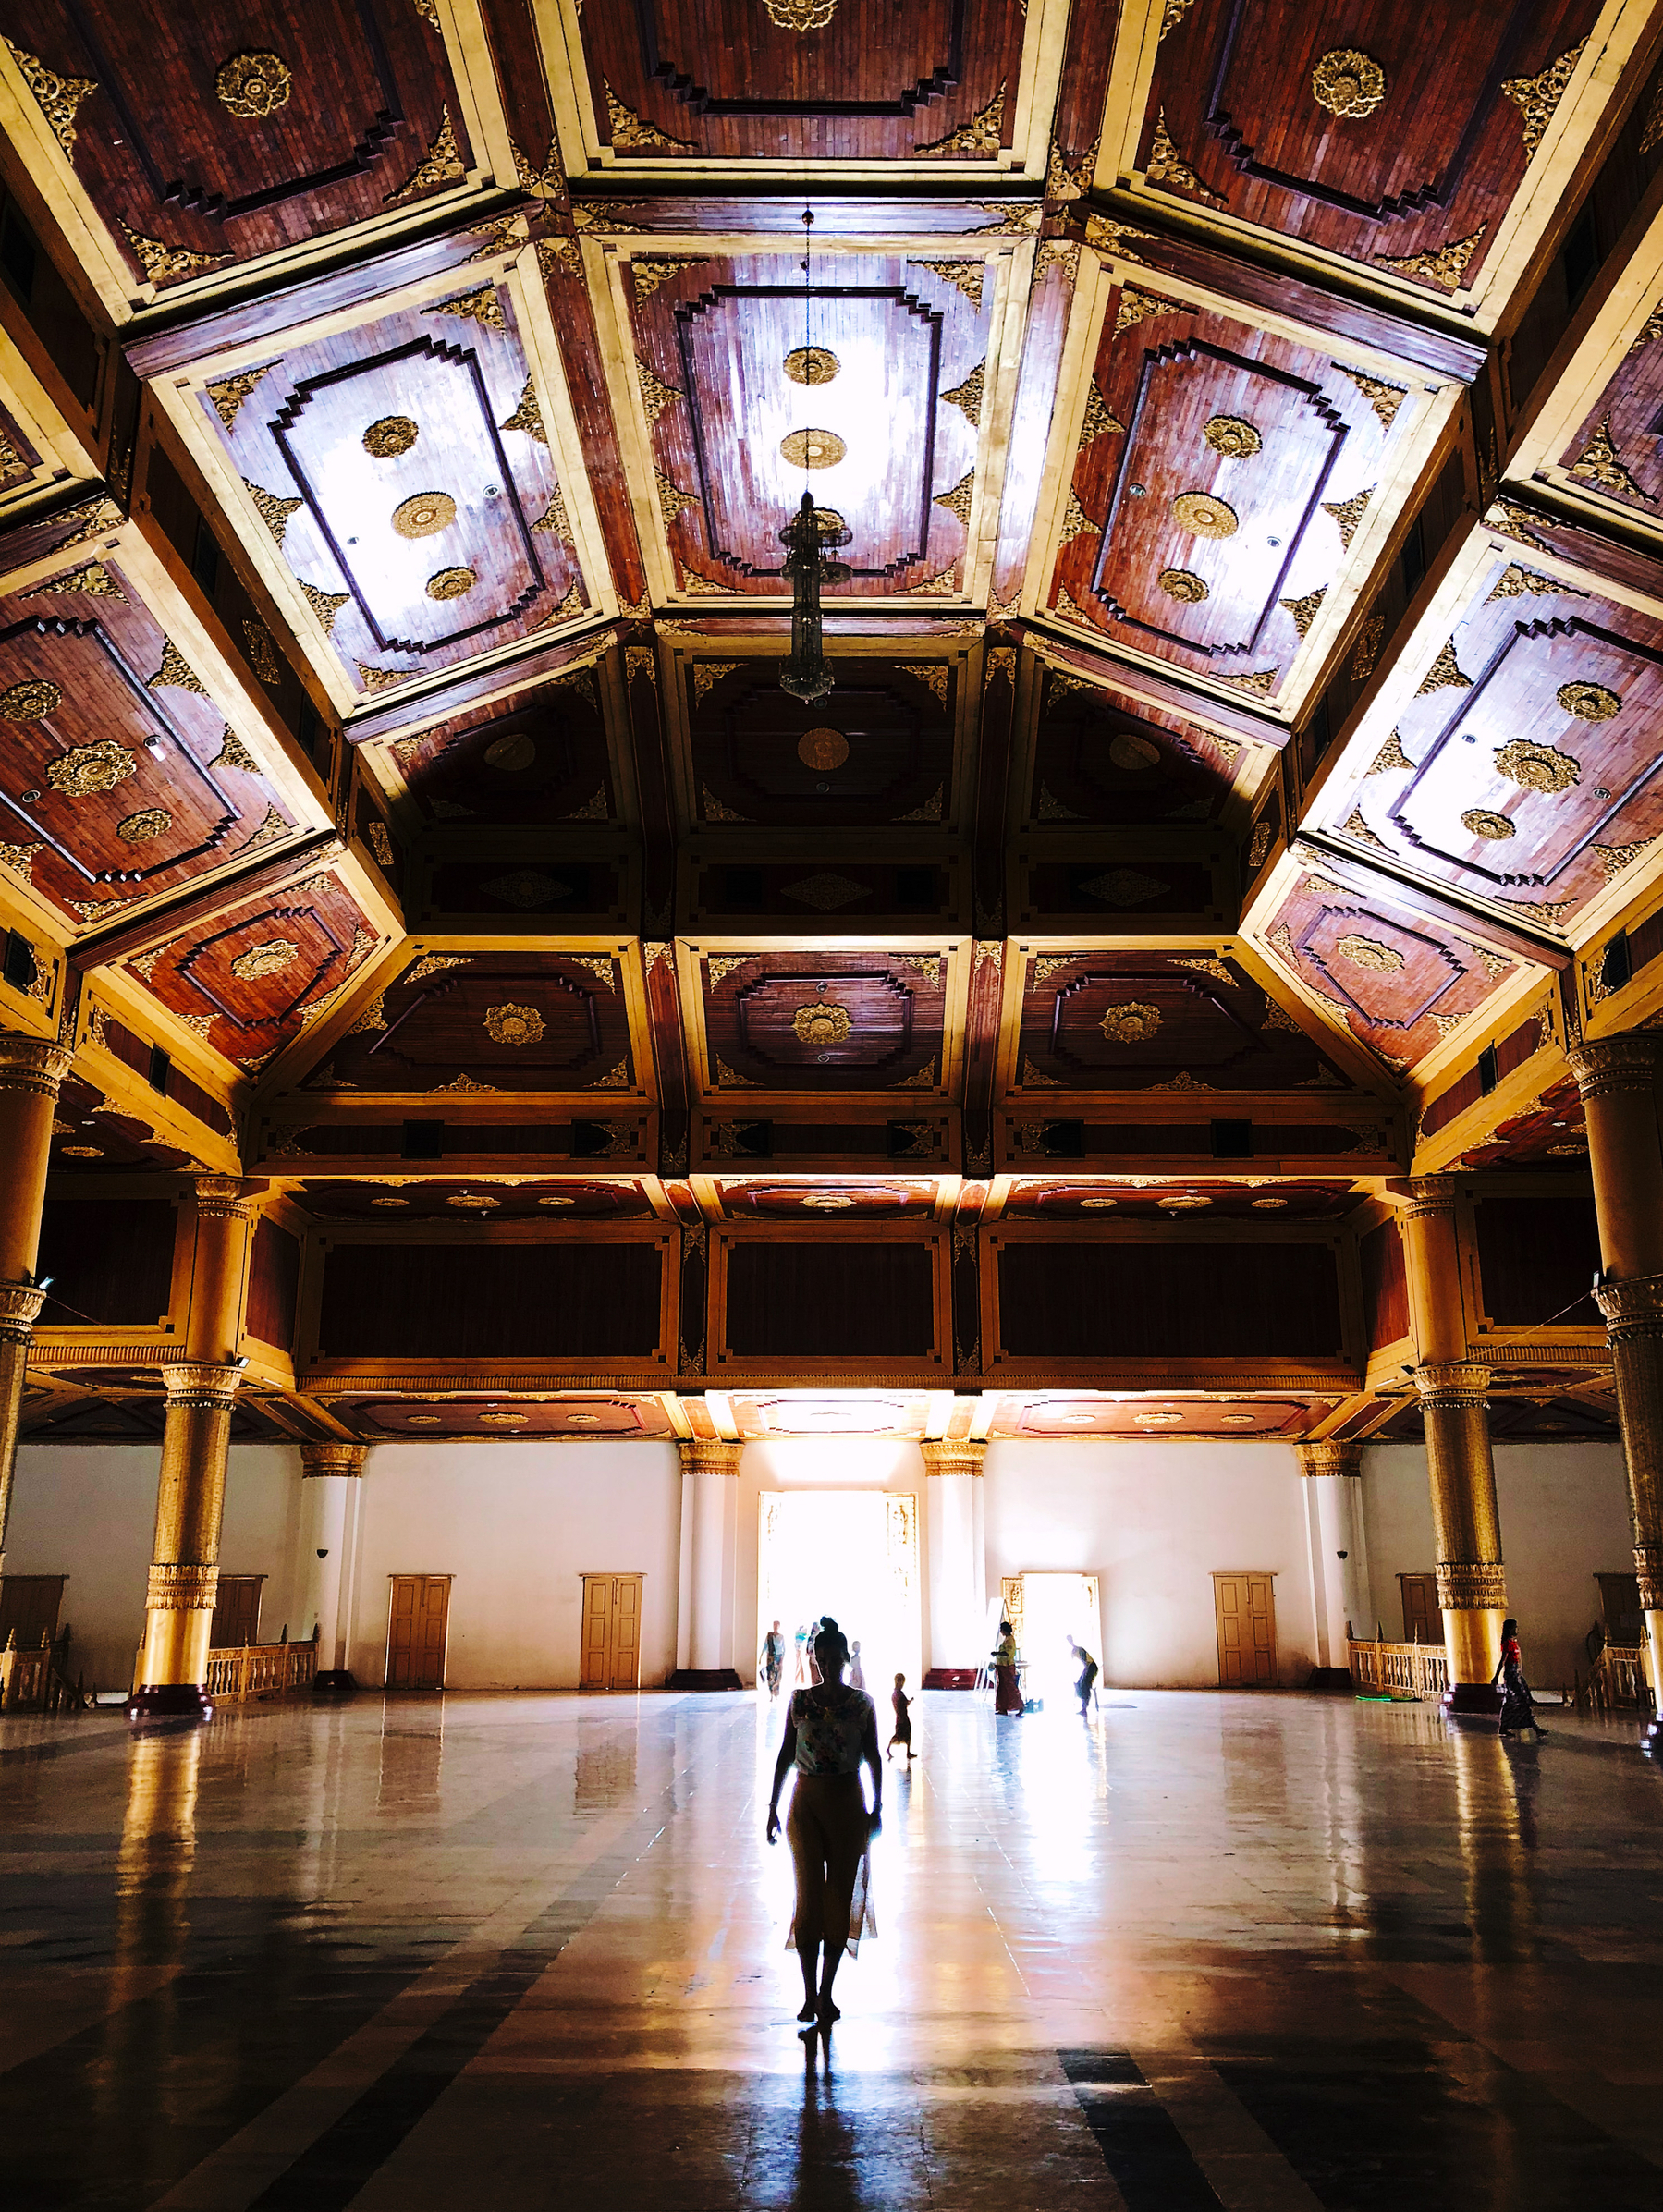 a woman walks toward us inside a huge temple room